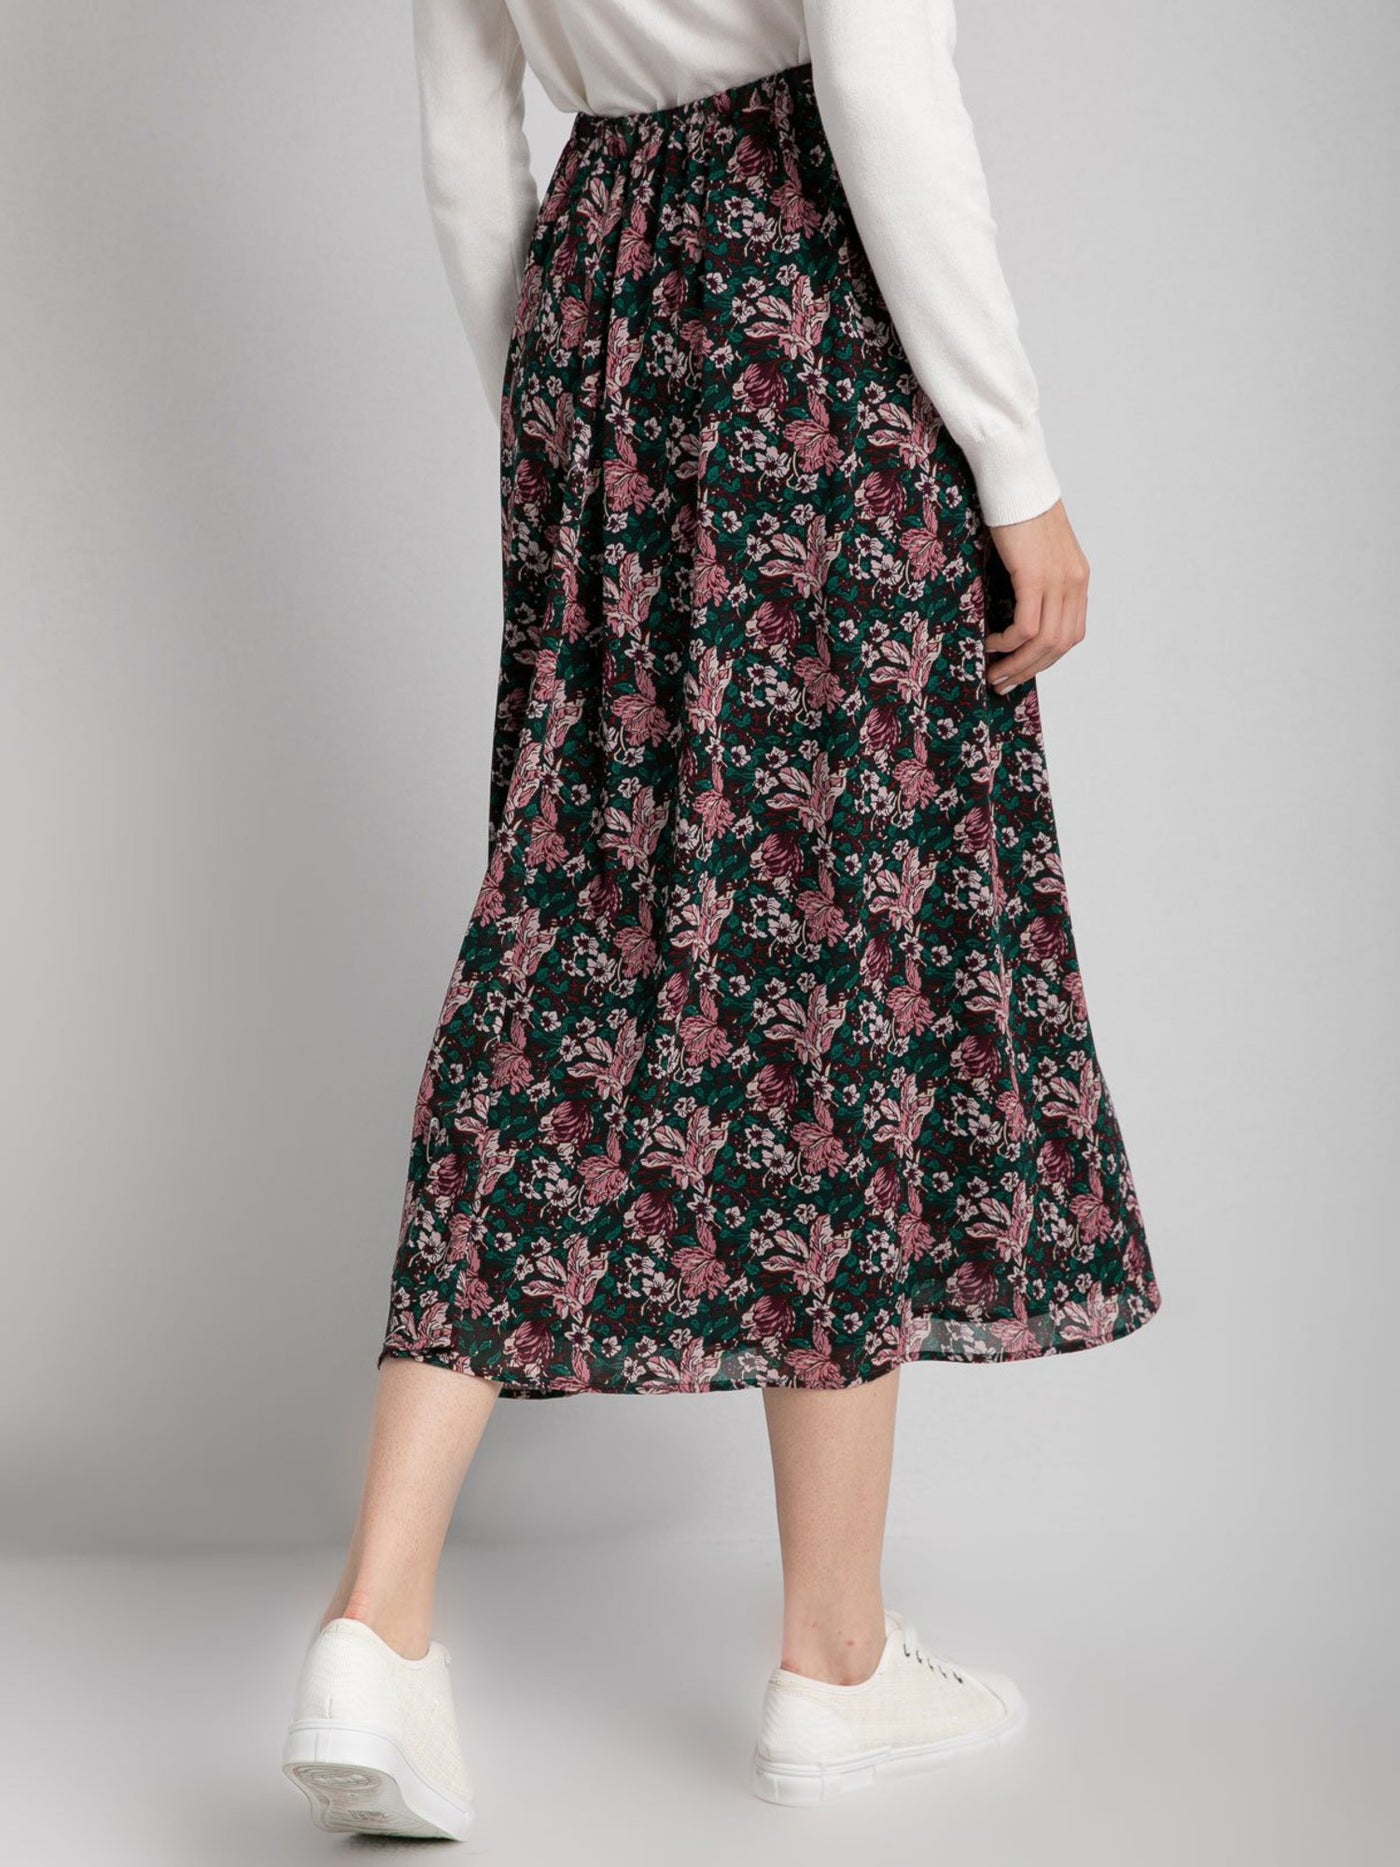 Floral Skirt - Midi Length